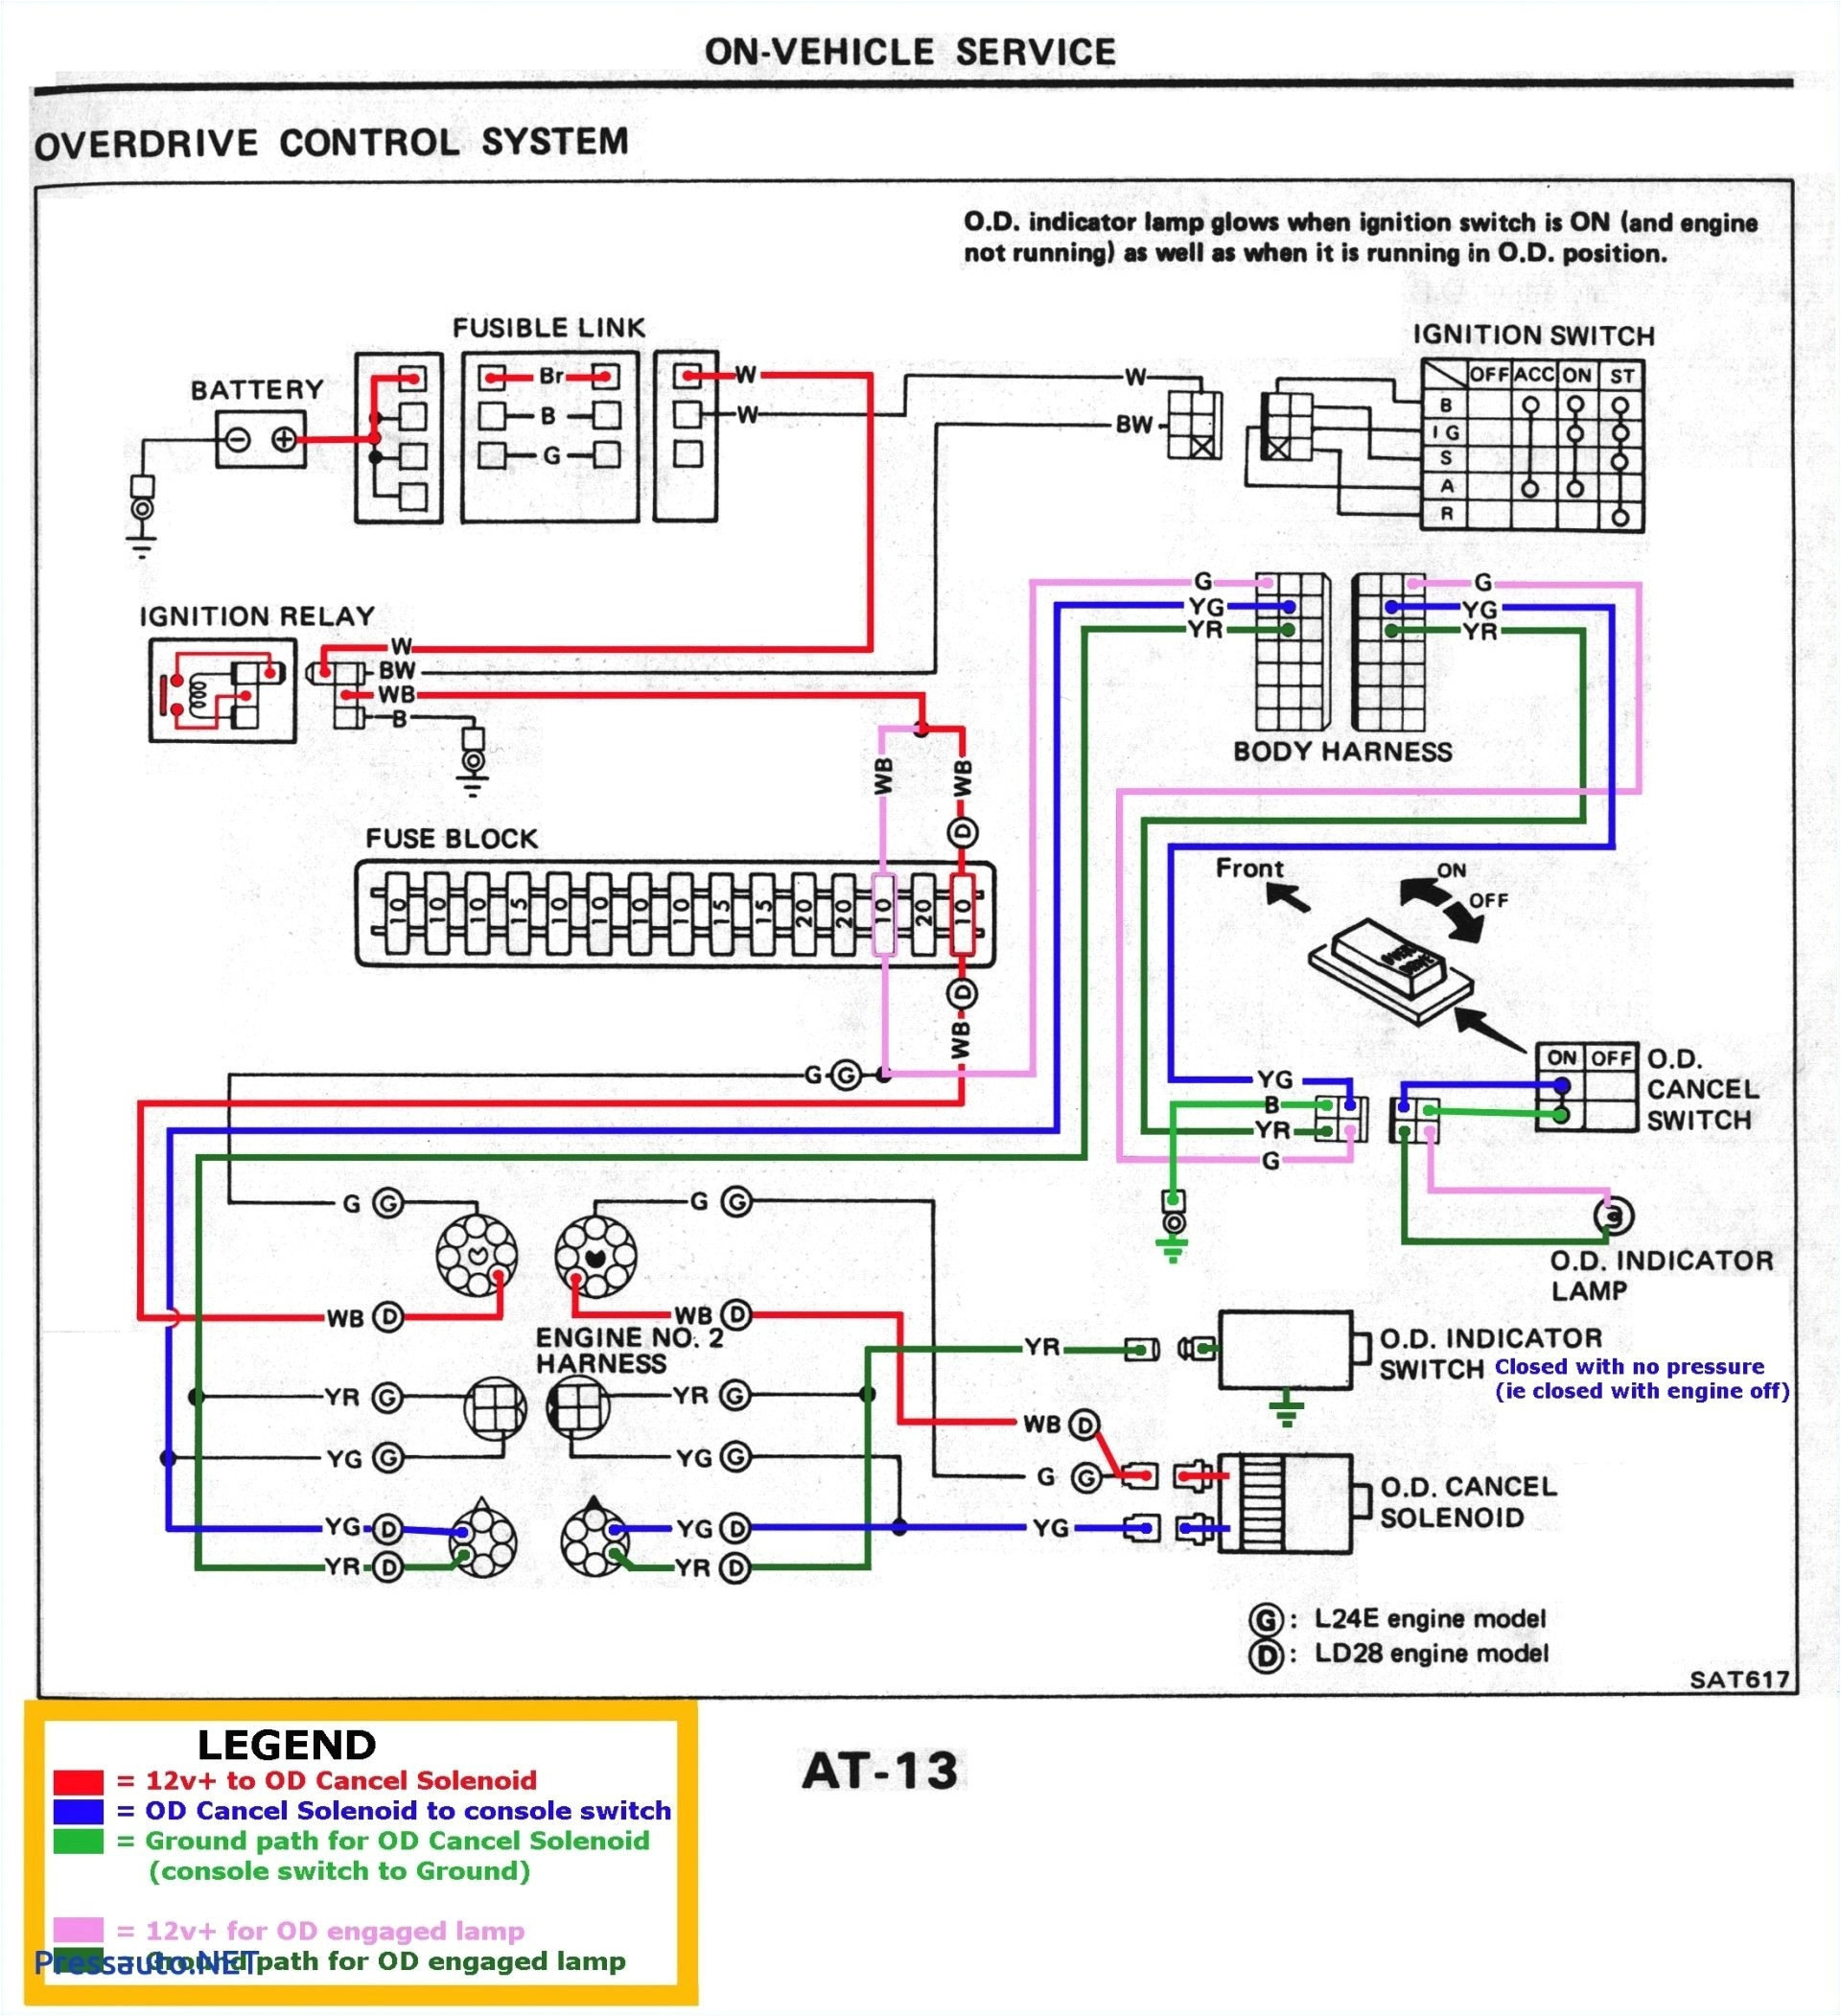 2001 Audi Tt Wiring Diagram Audi Concert 2 Wiring Diagram Blog Wiring Diagram